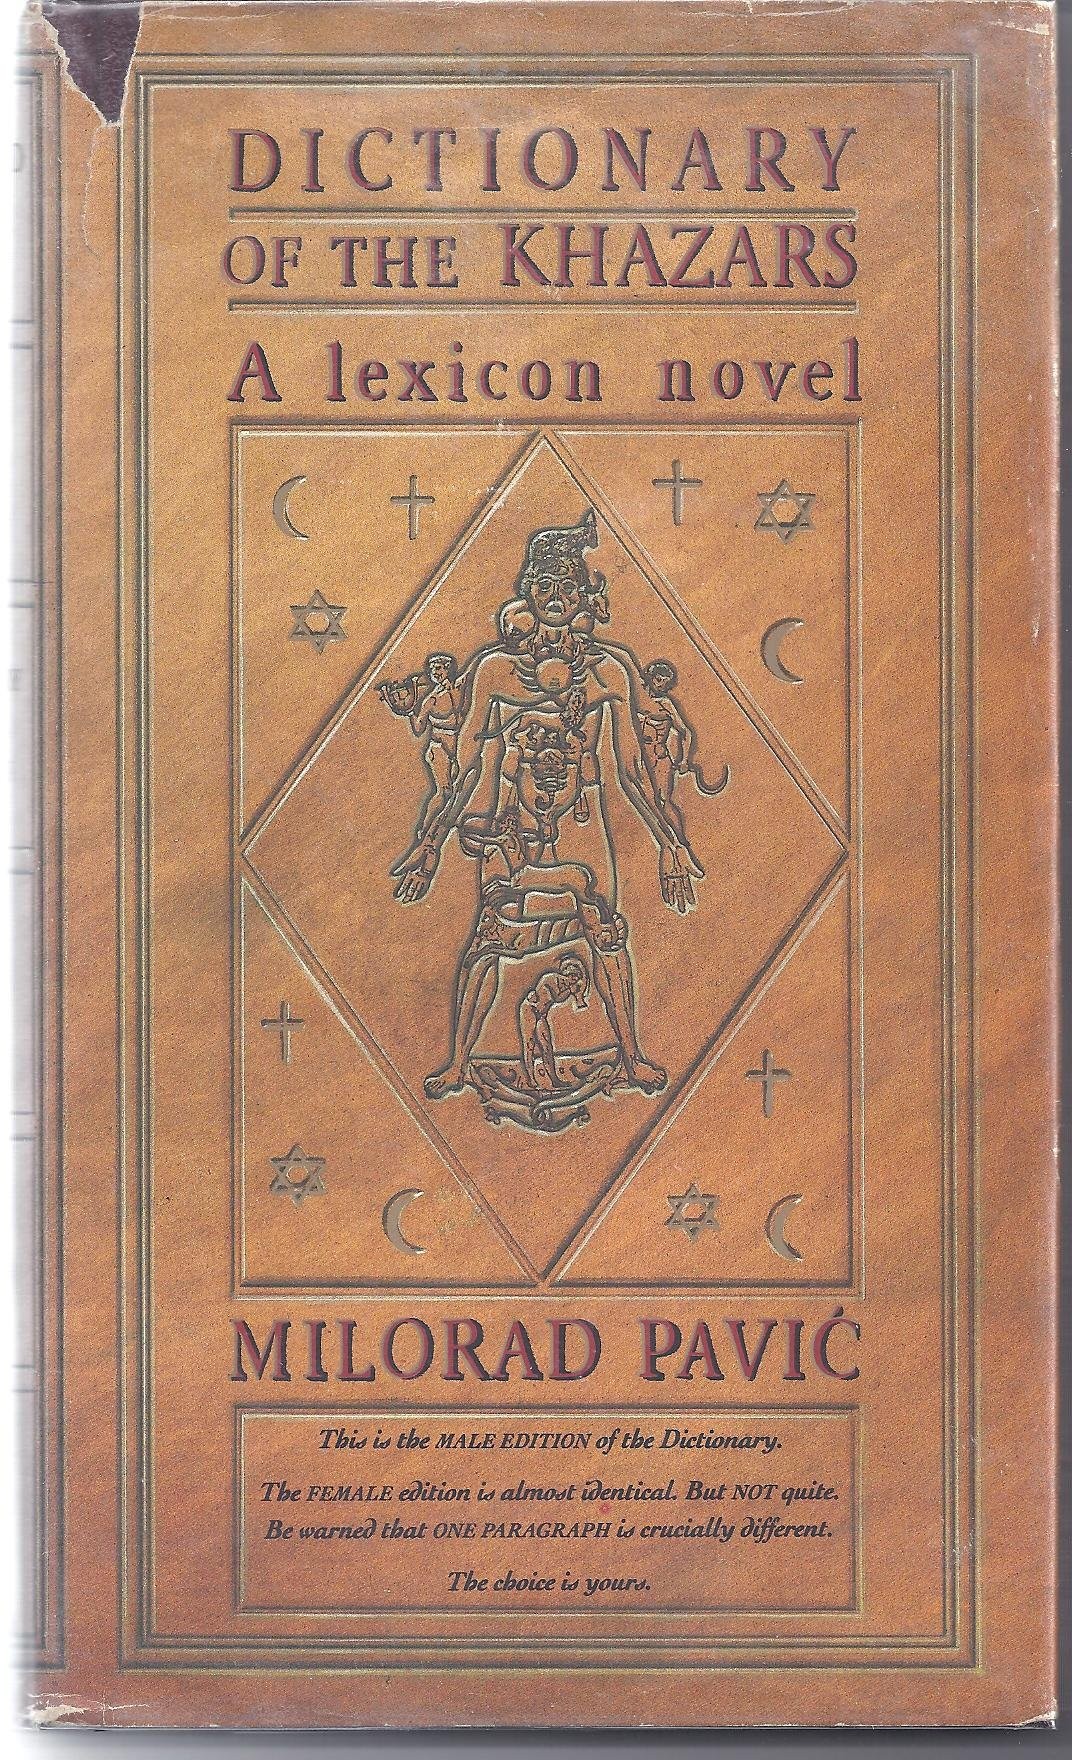 Dictionary of the Khazars: A Lexicon Novel in 100,000 Words